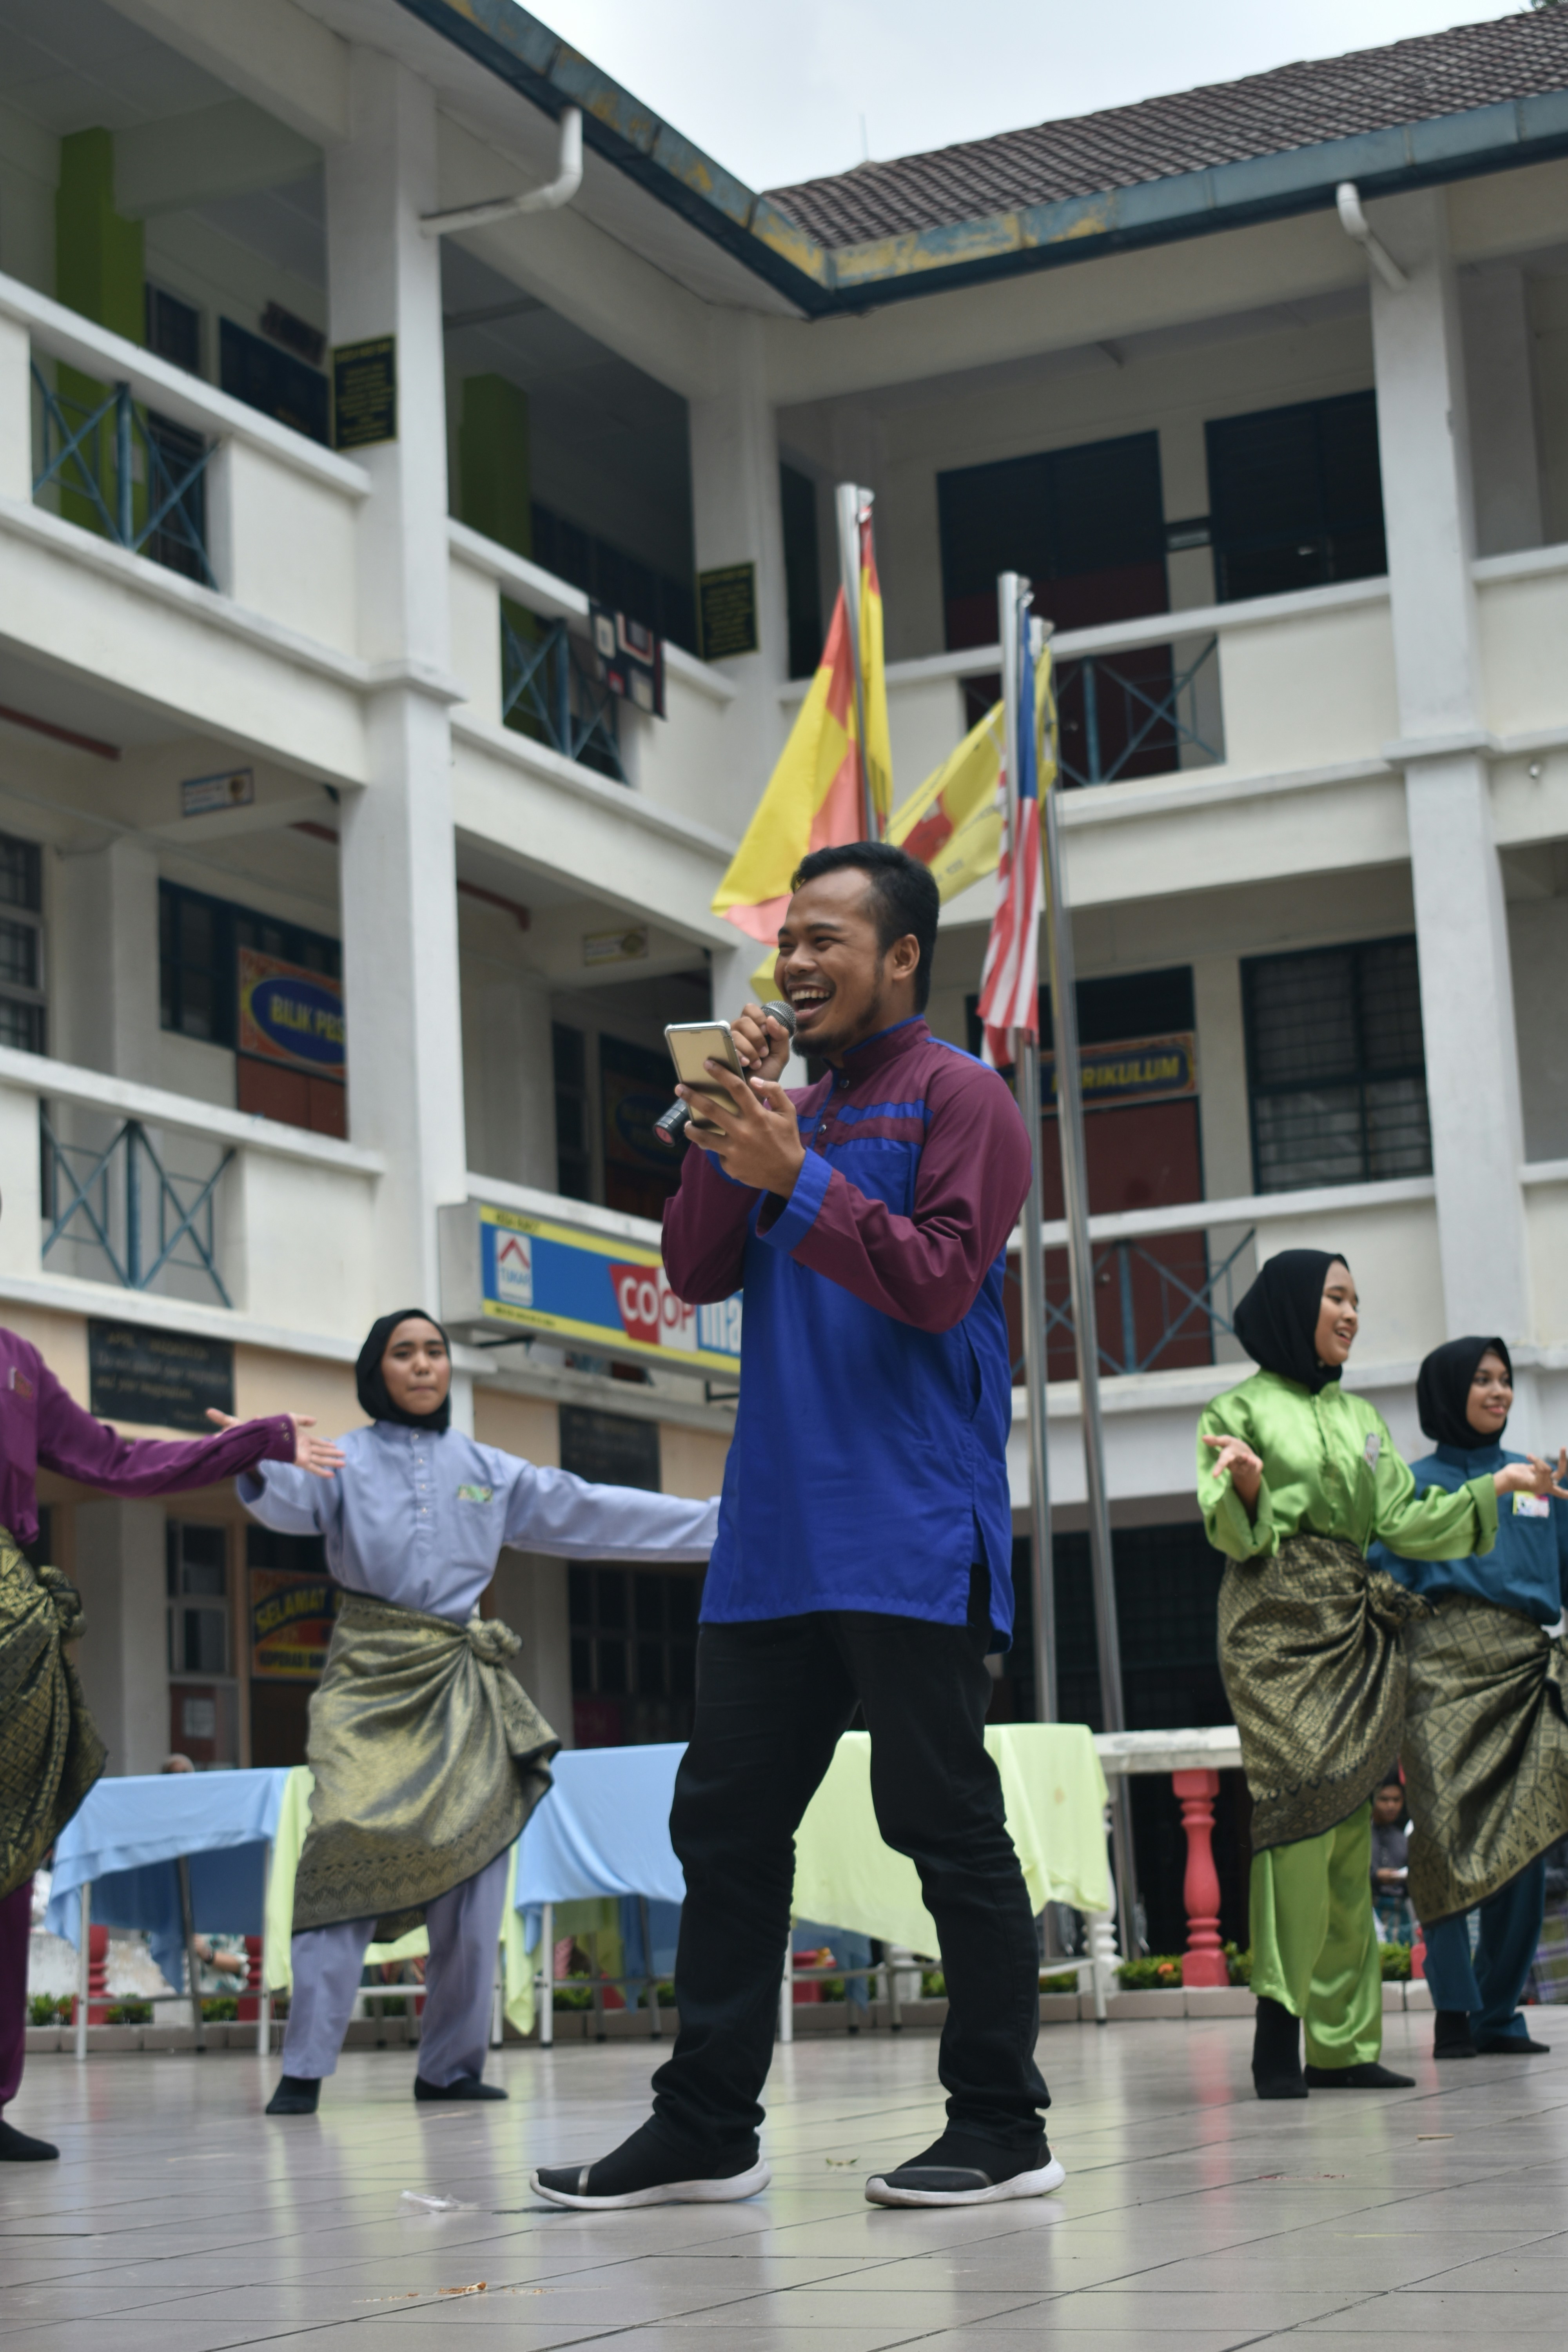 Singer during Hari Raya celebration at a school